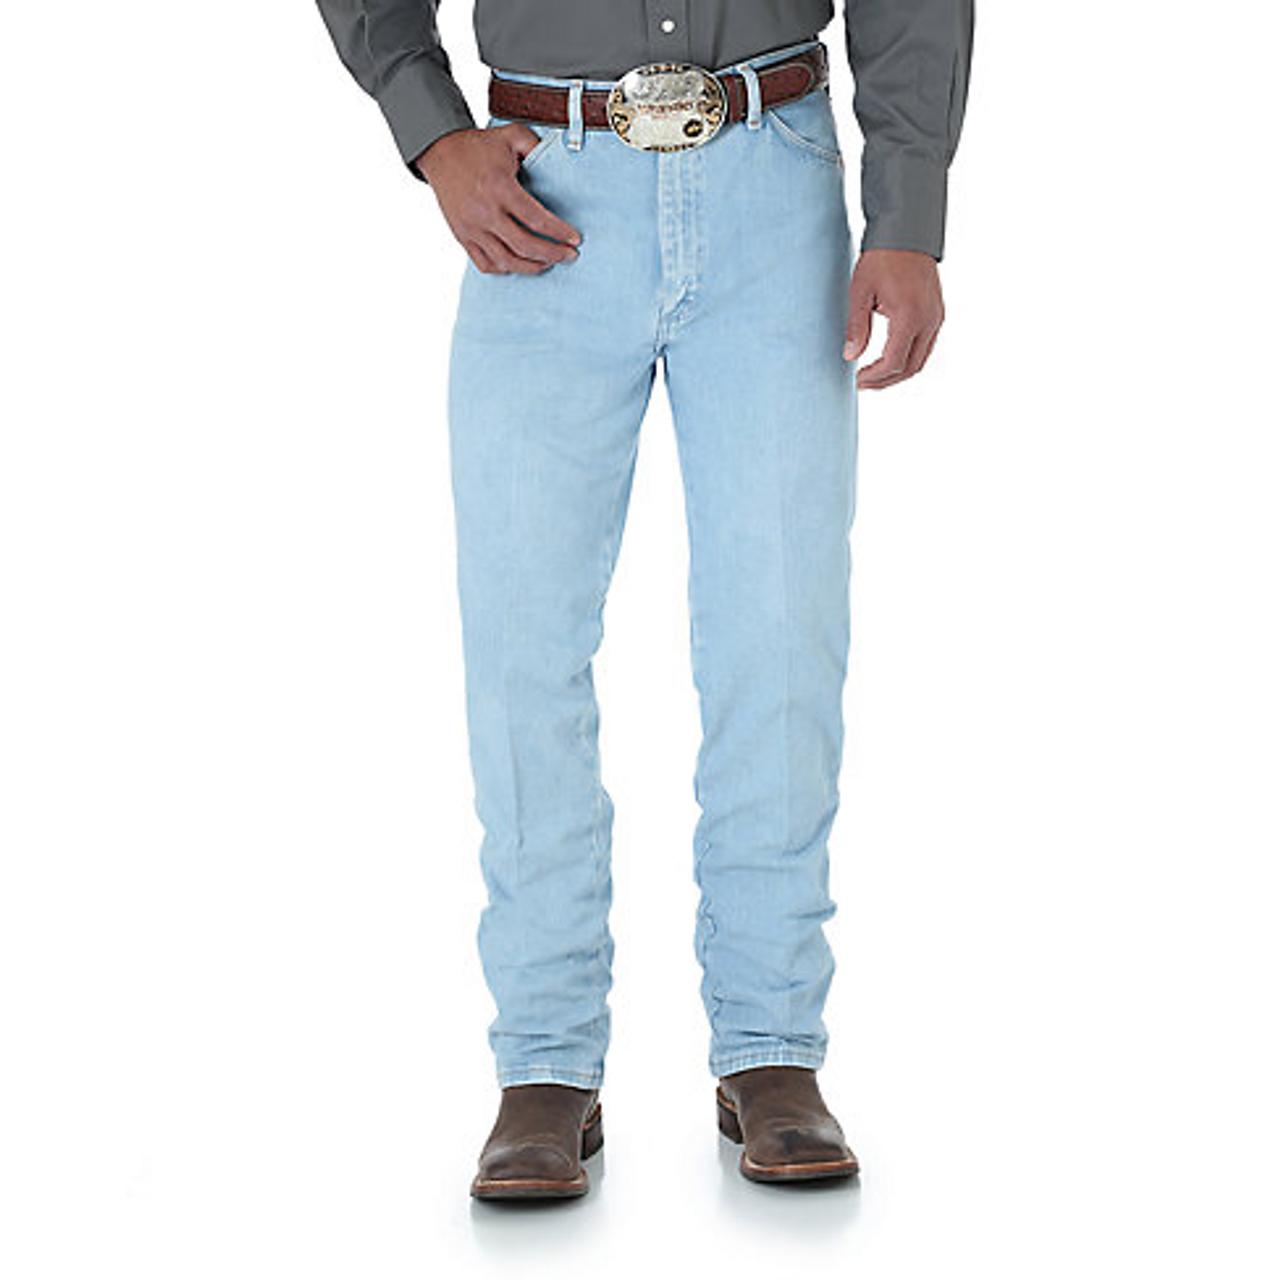 Wrangler Mens Jeans - Cowboy Cut Slim 